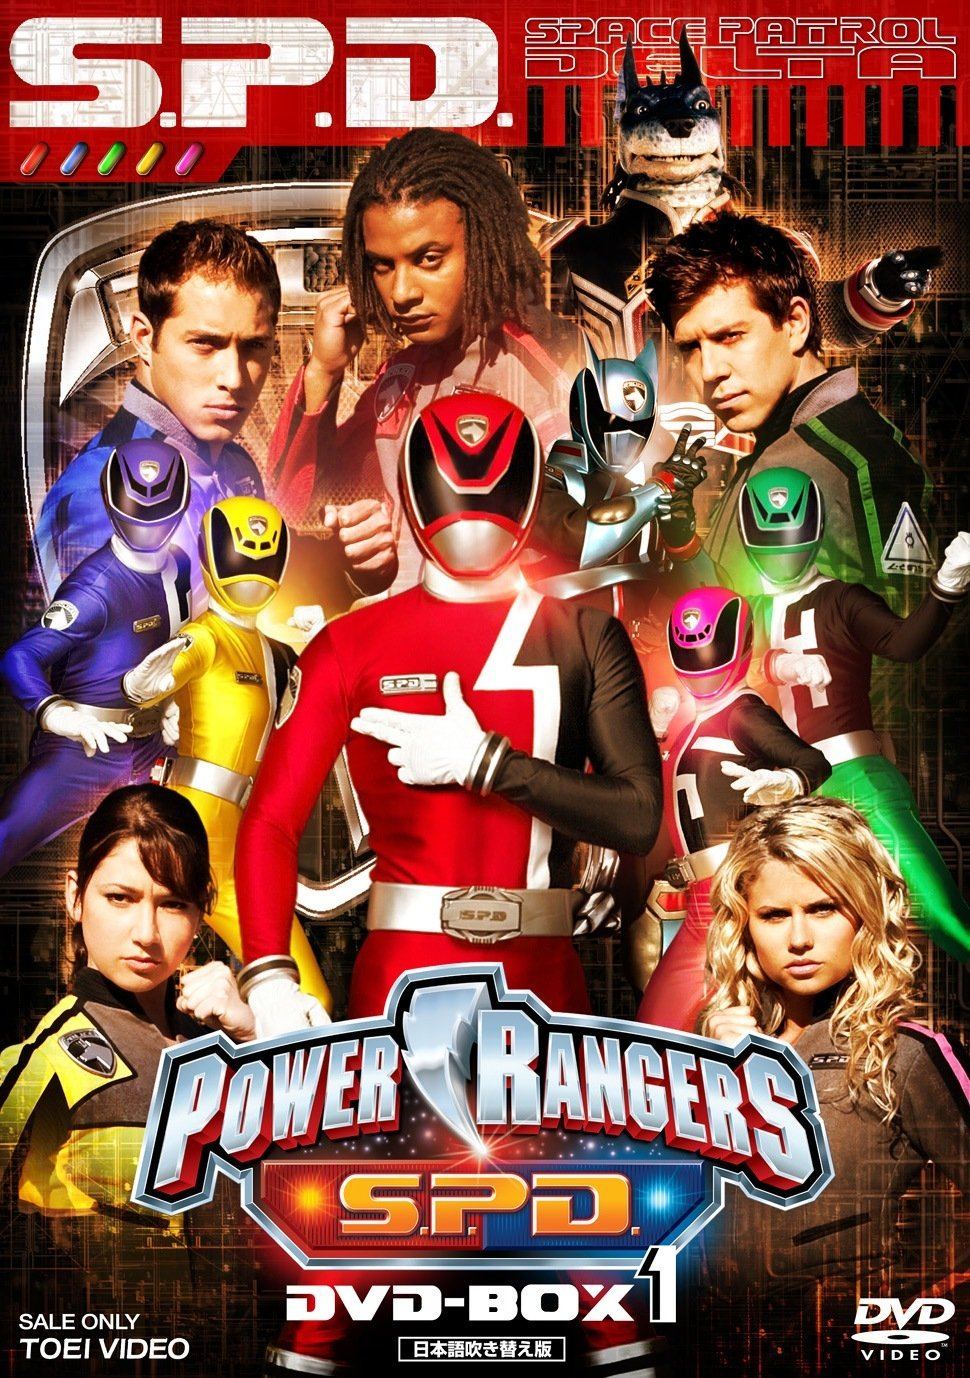 Power Rangers S.P.D. Dvd Box 1